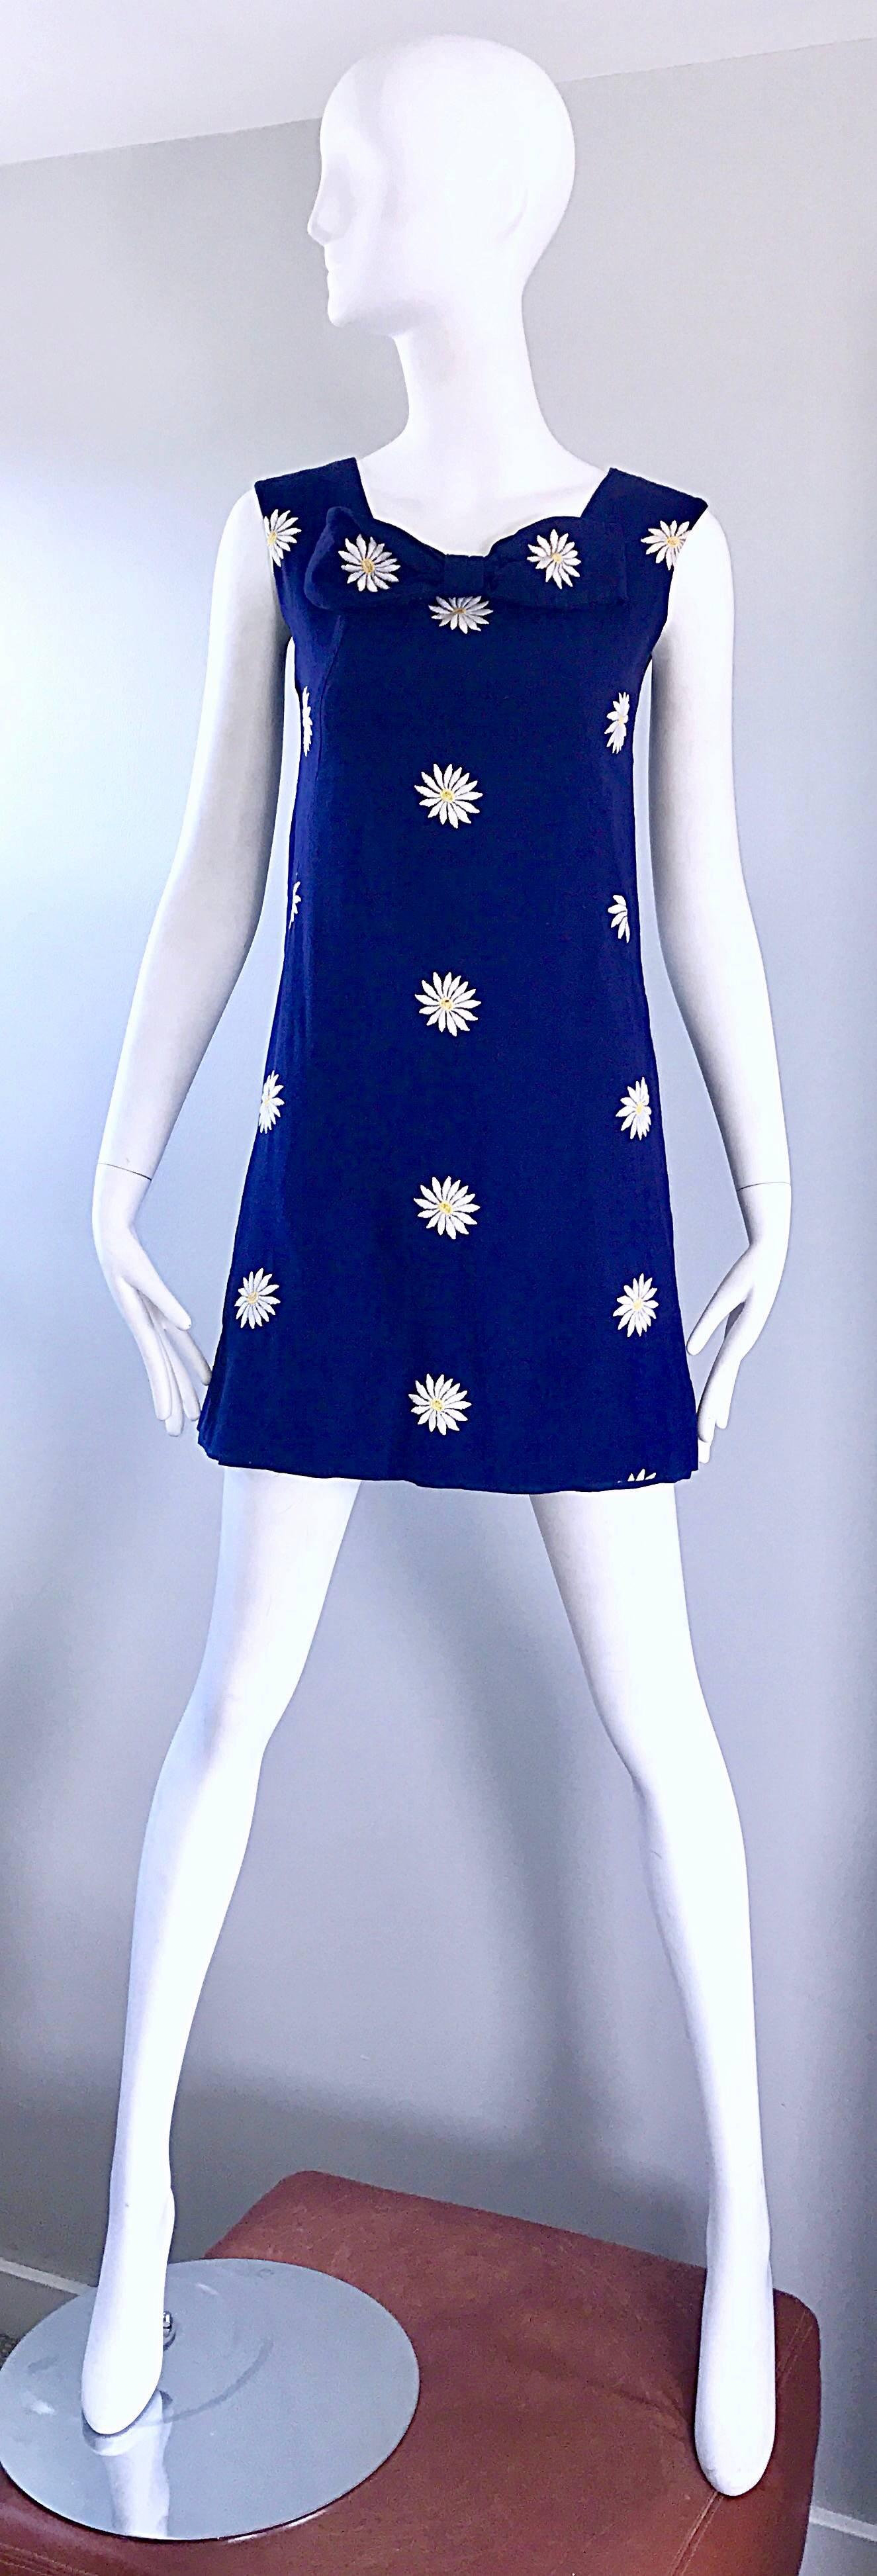 Chic 1960s Navy Blue Cotton Daisy Flower Print Vintage 60s Shift A - Line Dress For Sale 3